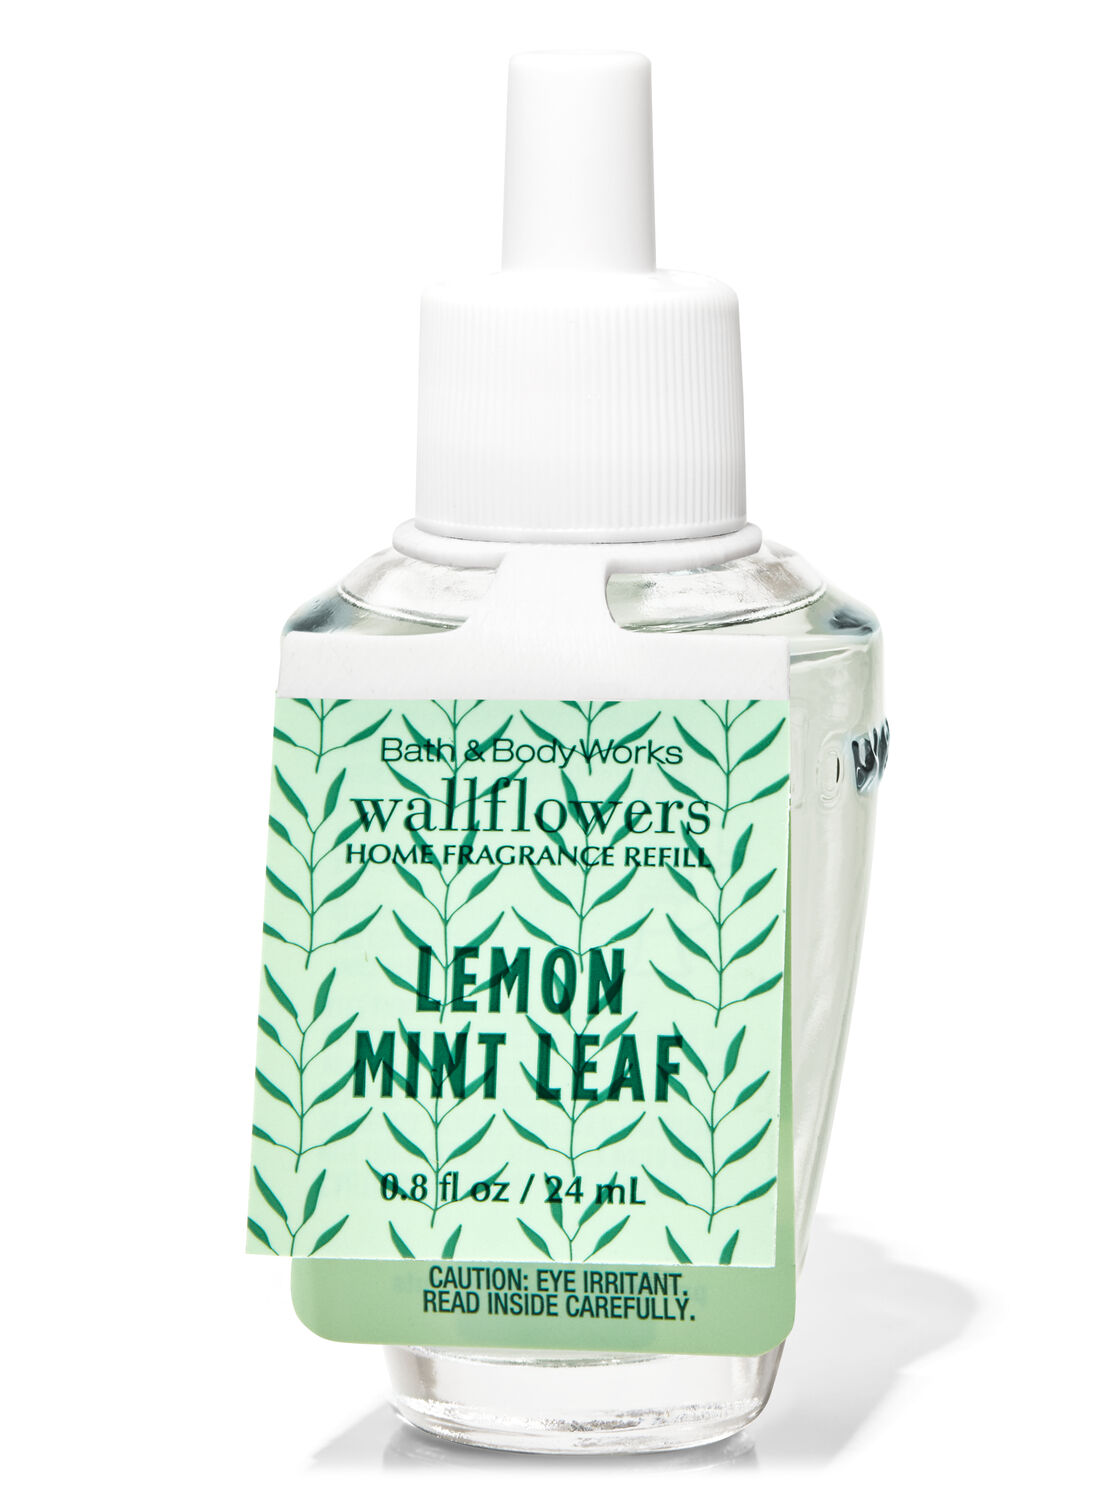 Lemon Mint Leaf Wallflowers Fragrance Refill